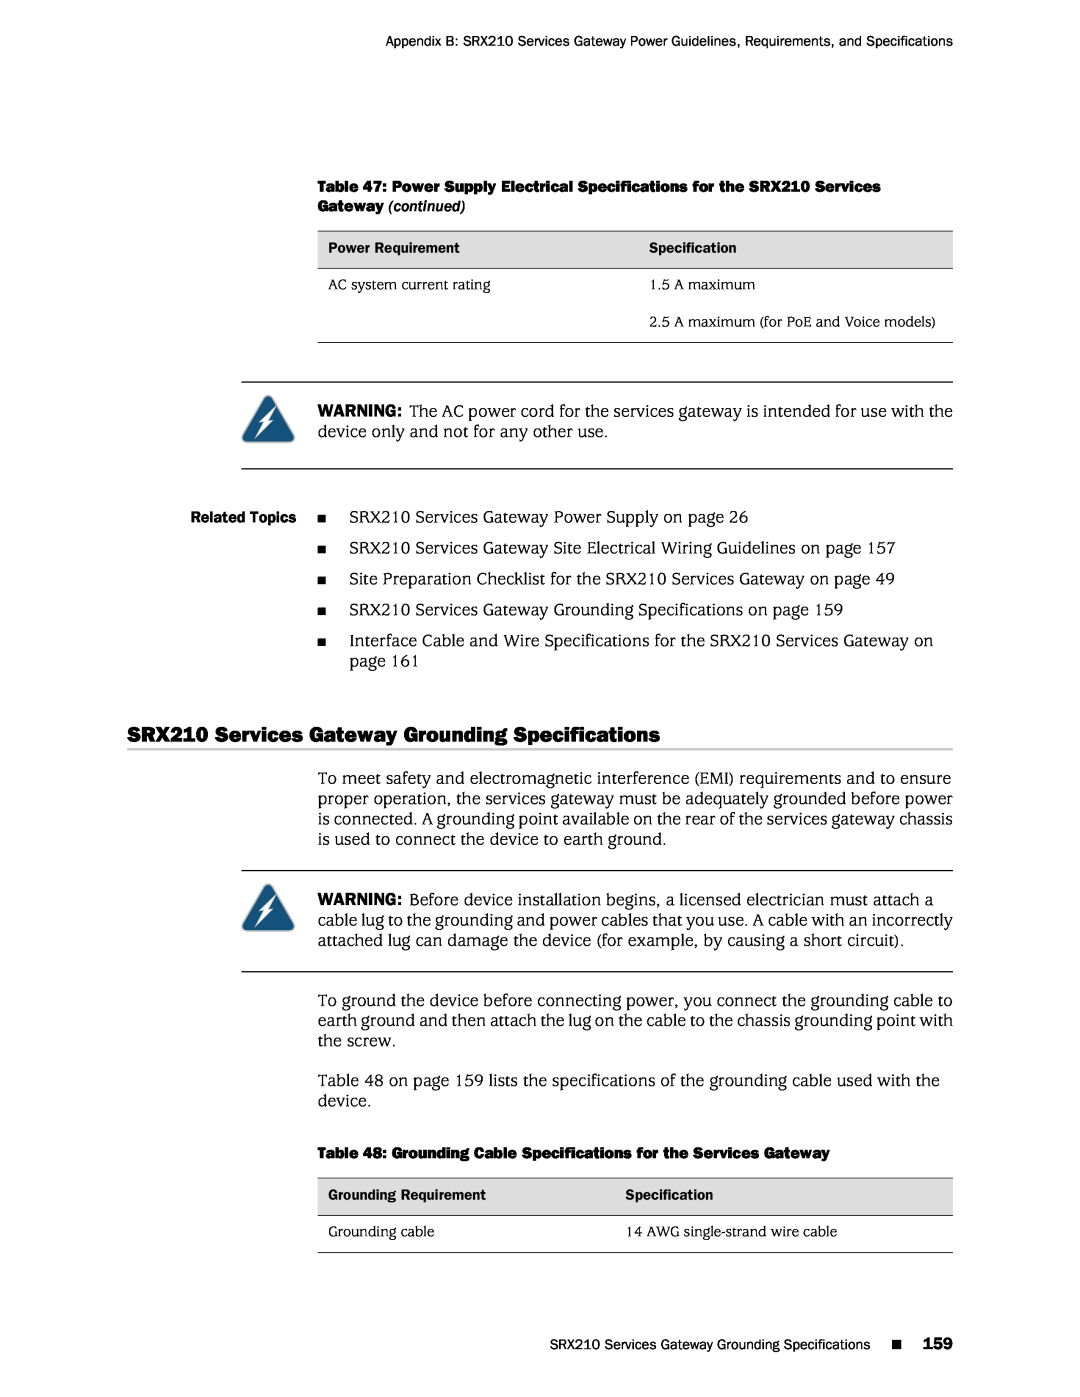 Juniper Networks SRX 210 manual SRX210 Services Gateway Grounding Specifications 